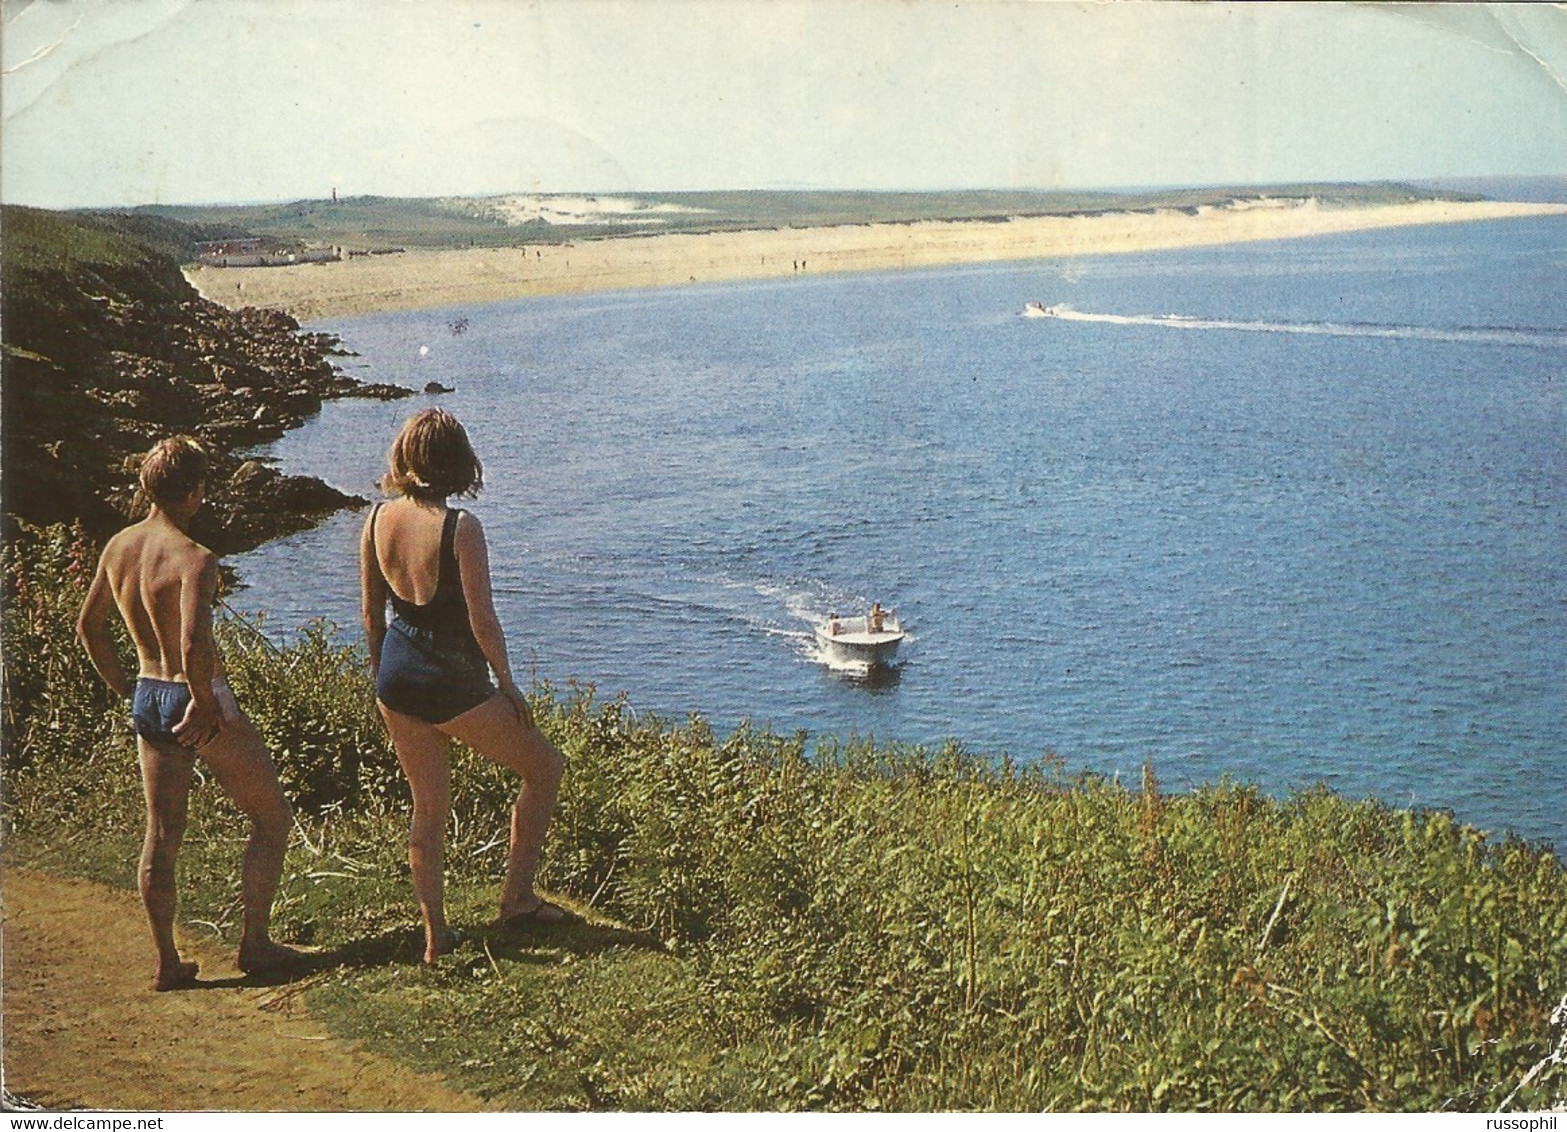 UK - CHANNEL ISLANDS - HERM - SHELL BEACH - 1973 - Herm